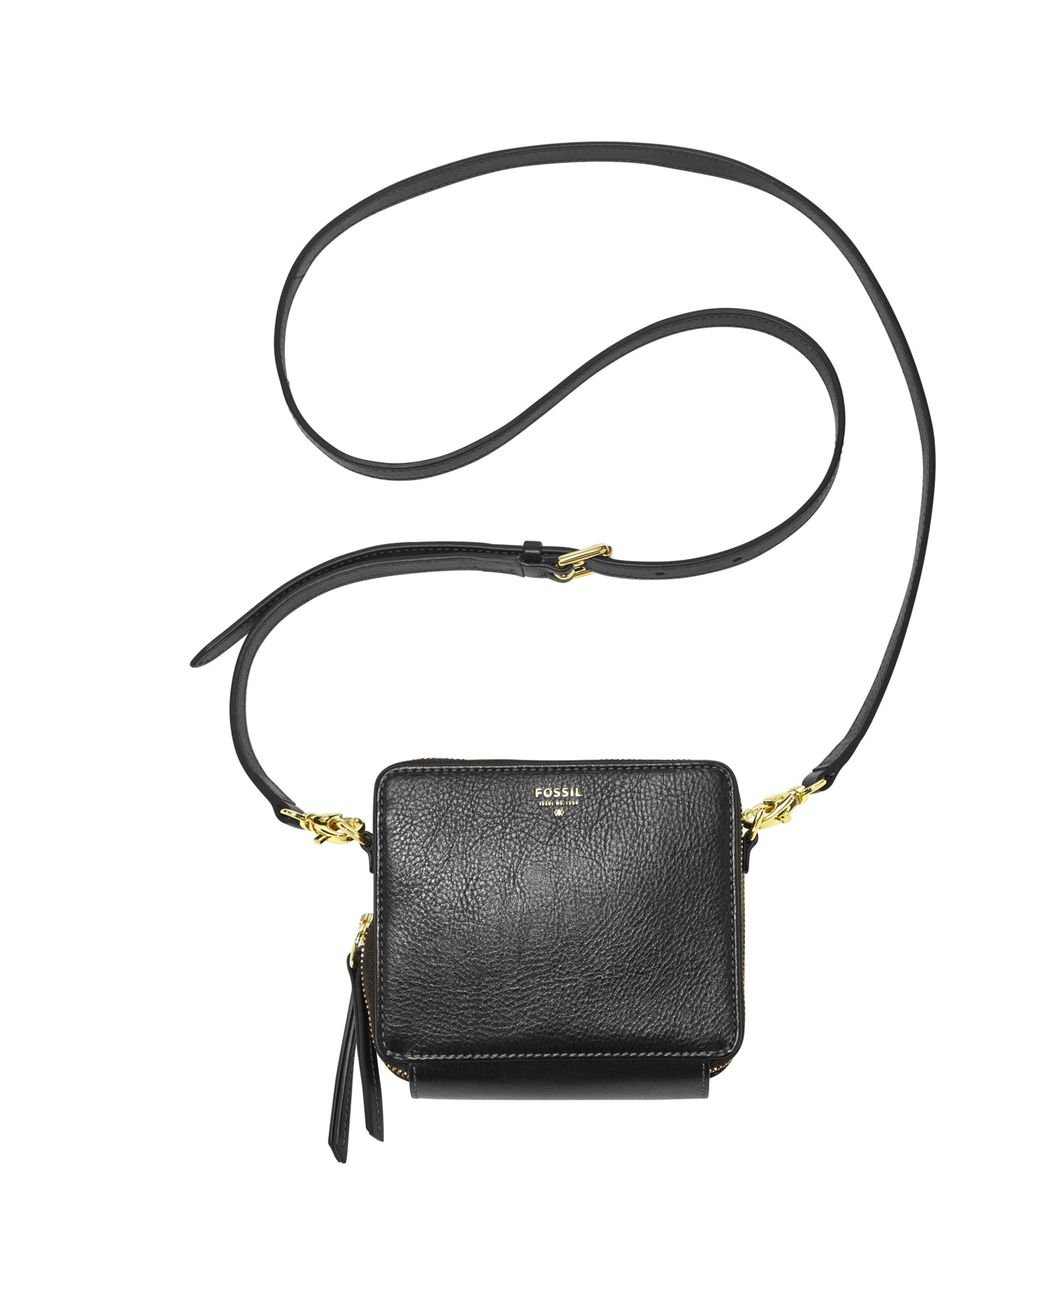  Fossil Women's Sydney Leather Satchel Purse Handbag, Black :  Clothing, Shoes & Jewelry